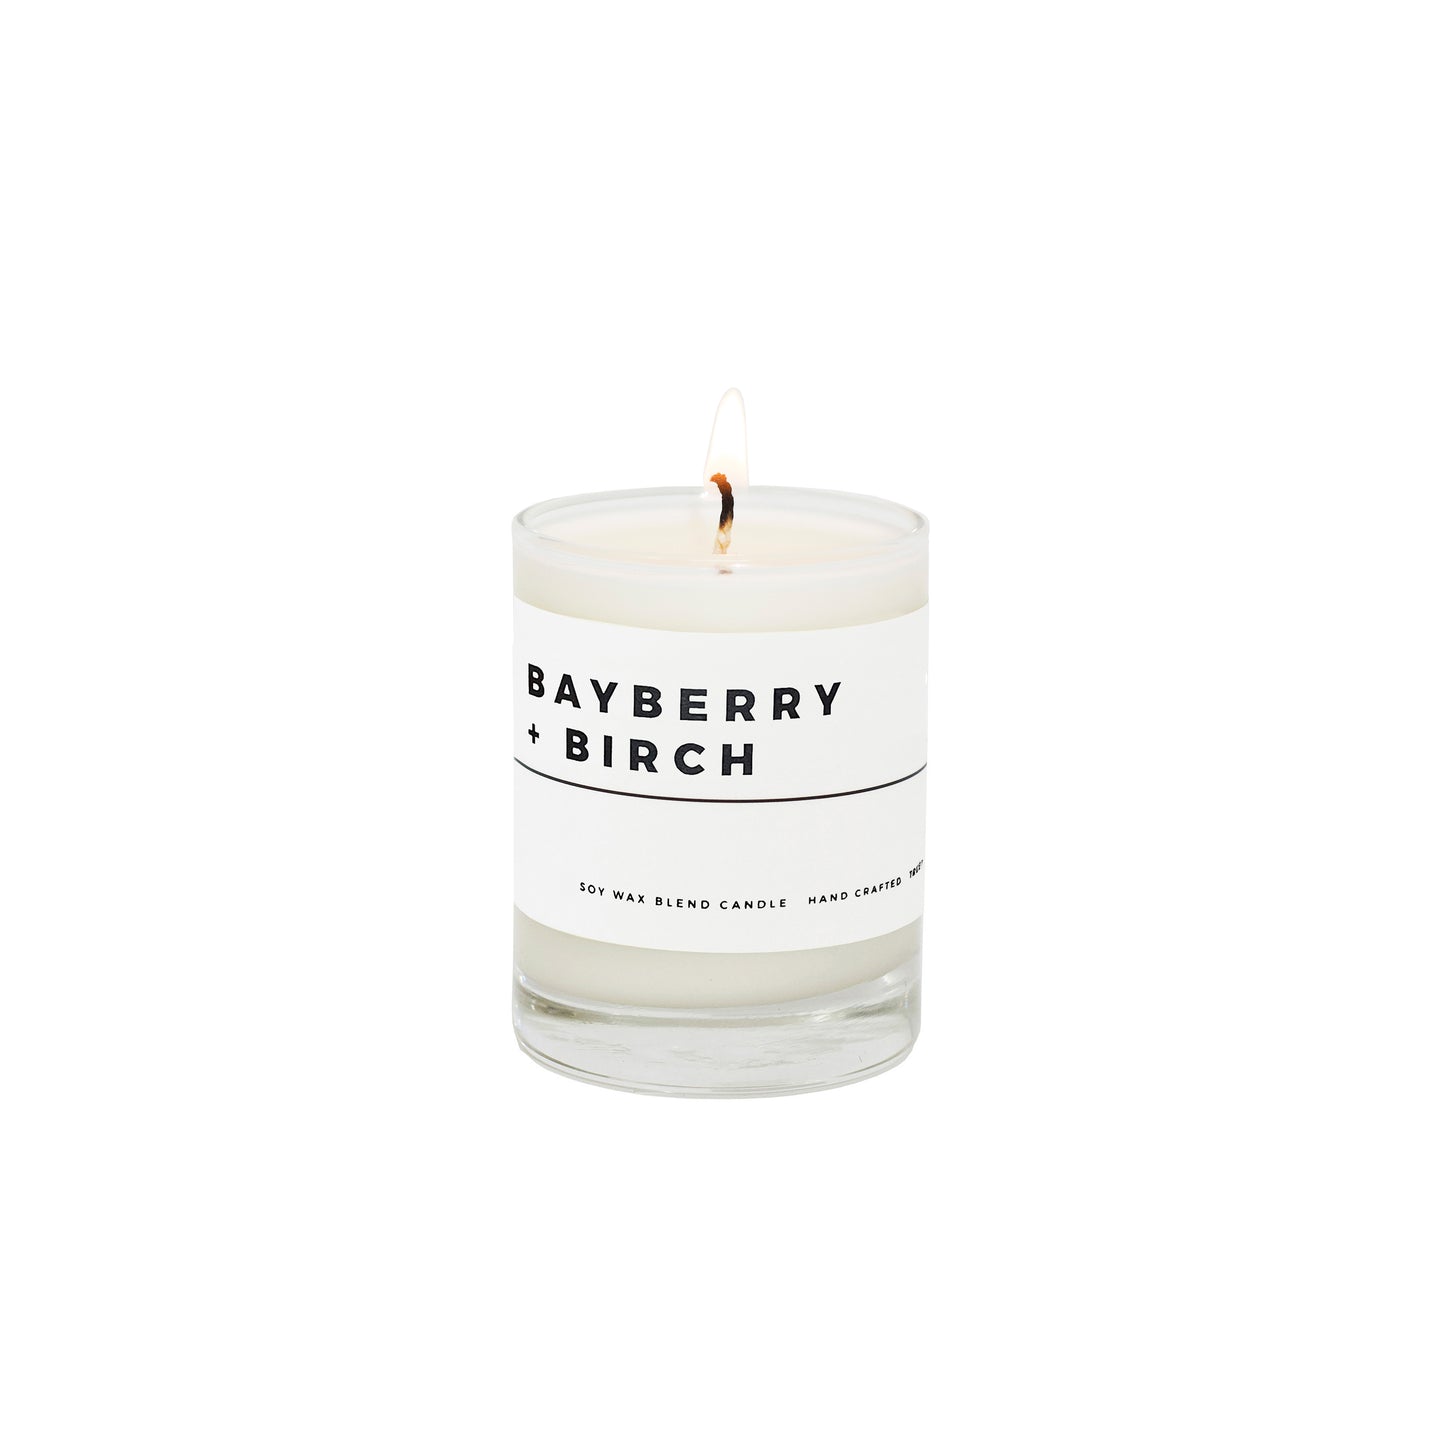 Bayberry + Birch Mini Candle